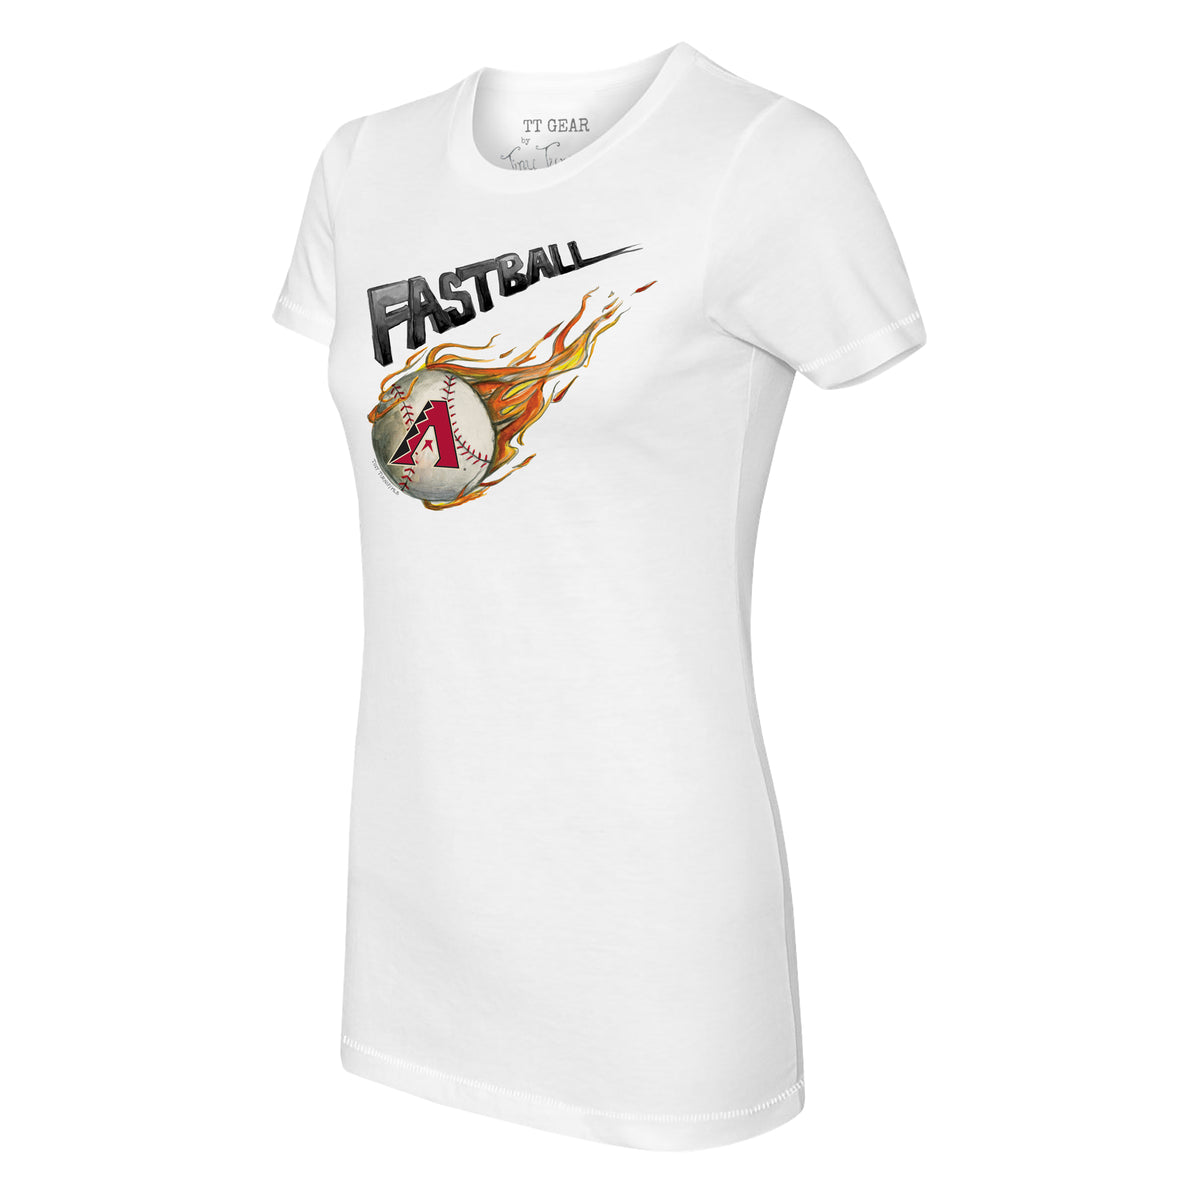 Arizona Diamondbacks Fastball Tee Shirt